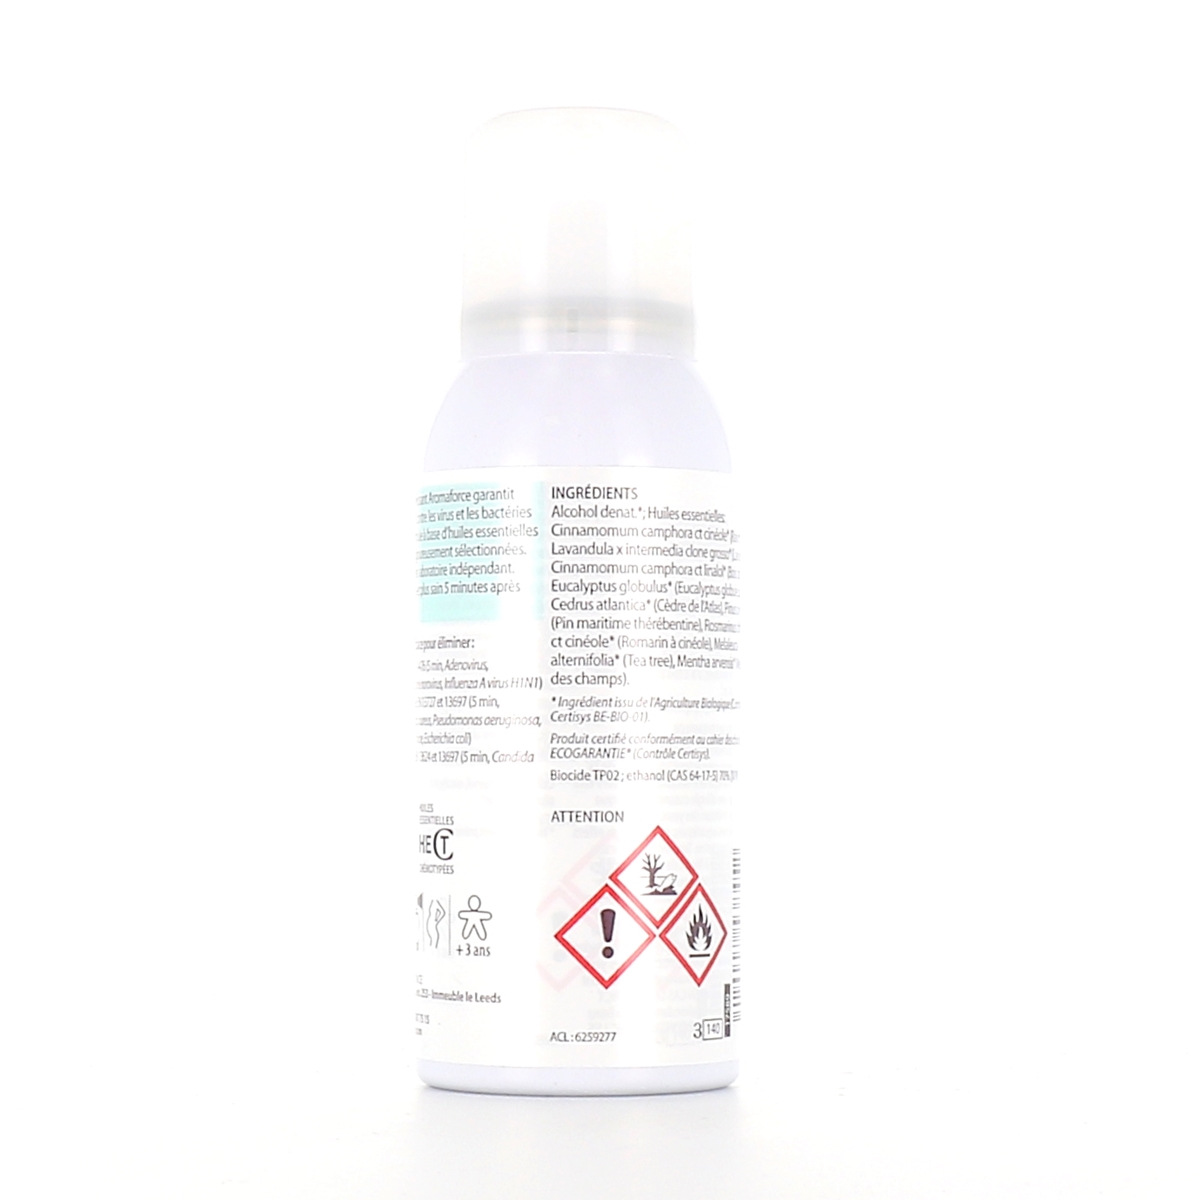 Spray Assainissant Orange douce Ravintsara - Aromaforce 150ml